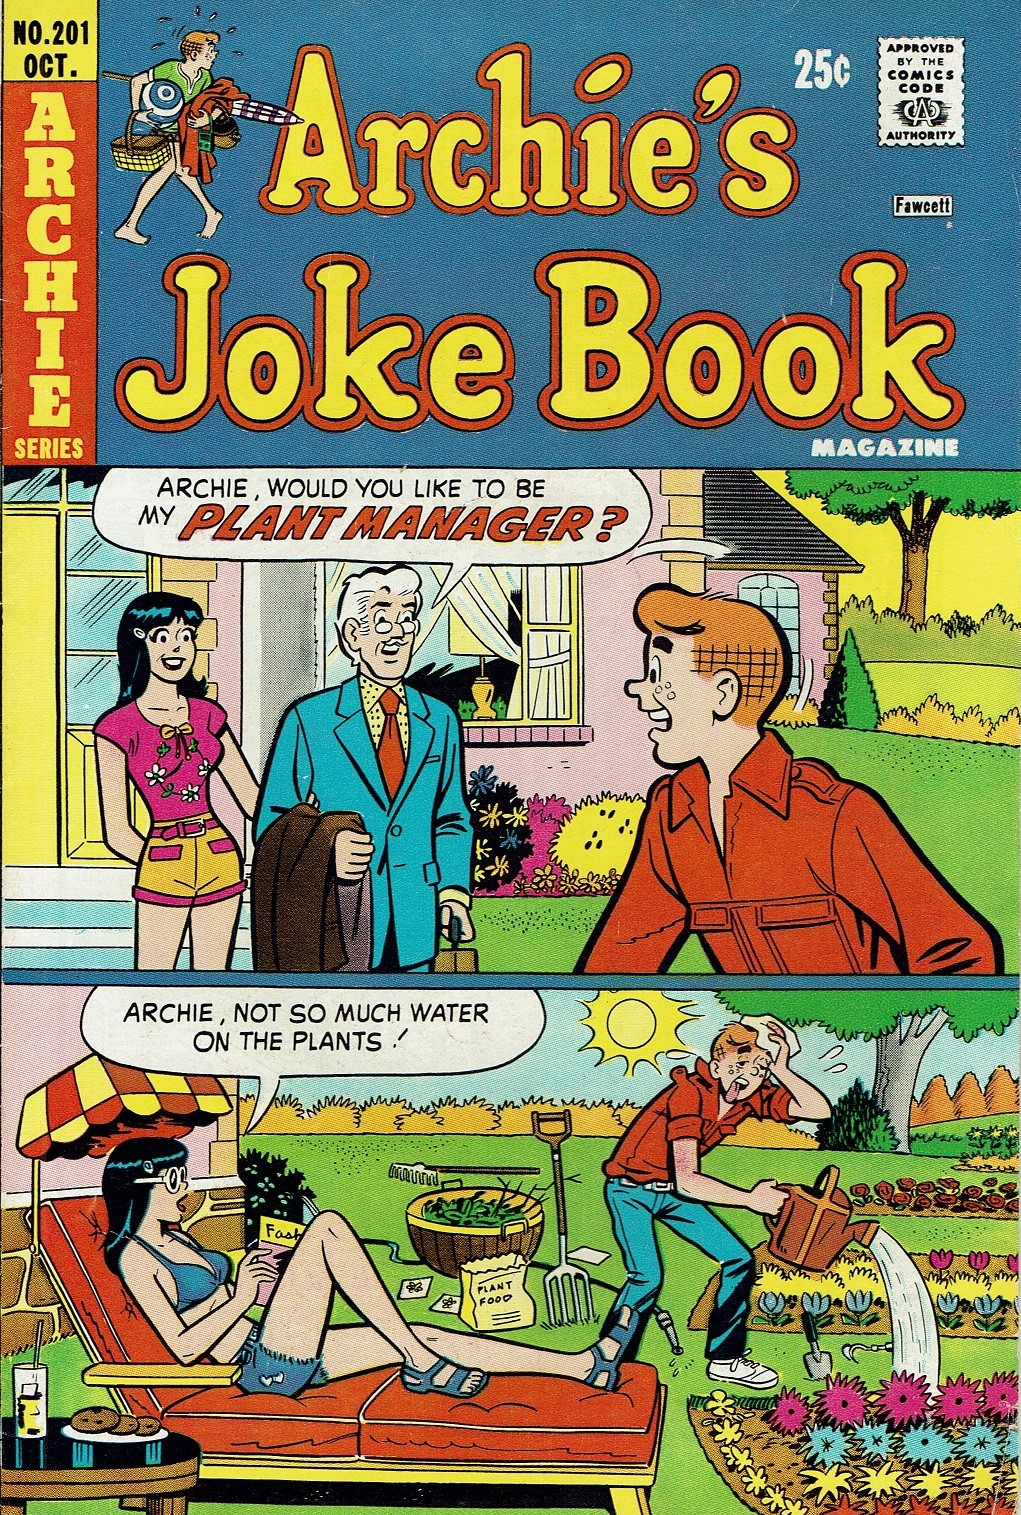 Archie's Joke Book Magazine issue 201 - Page 1